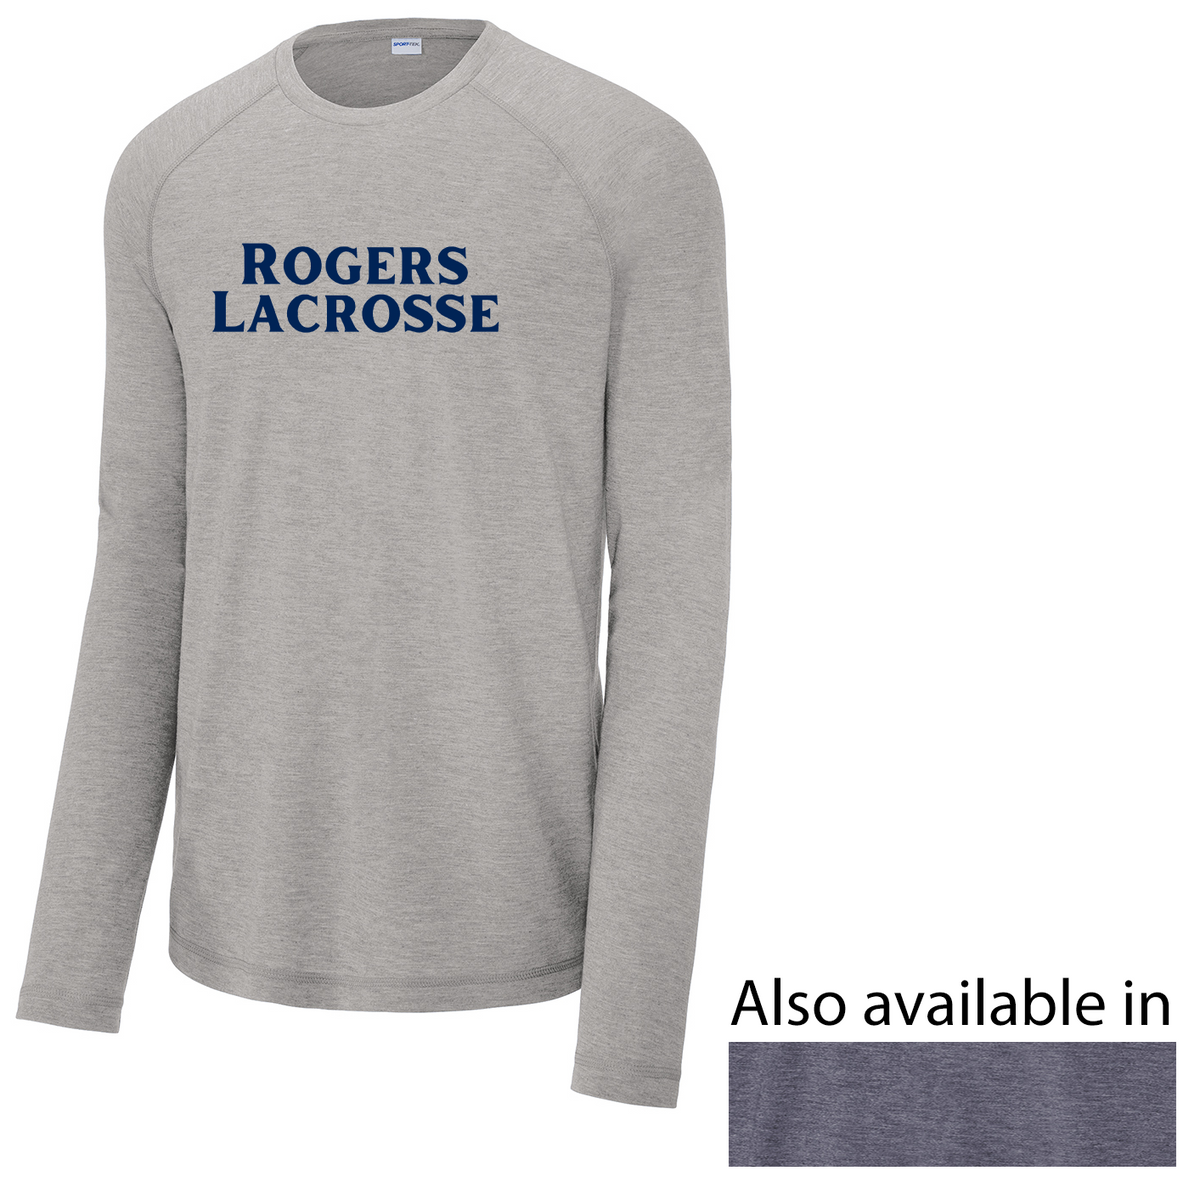 Rogers Lacrosse Long Sleeve Raglan CottonTouch